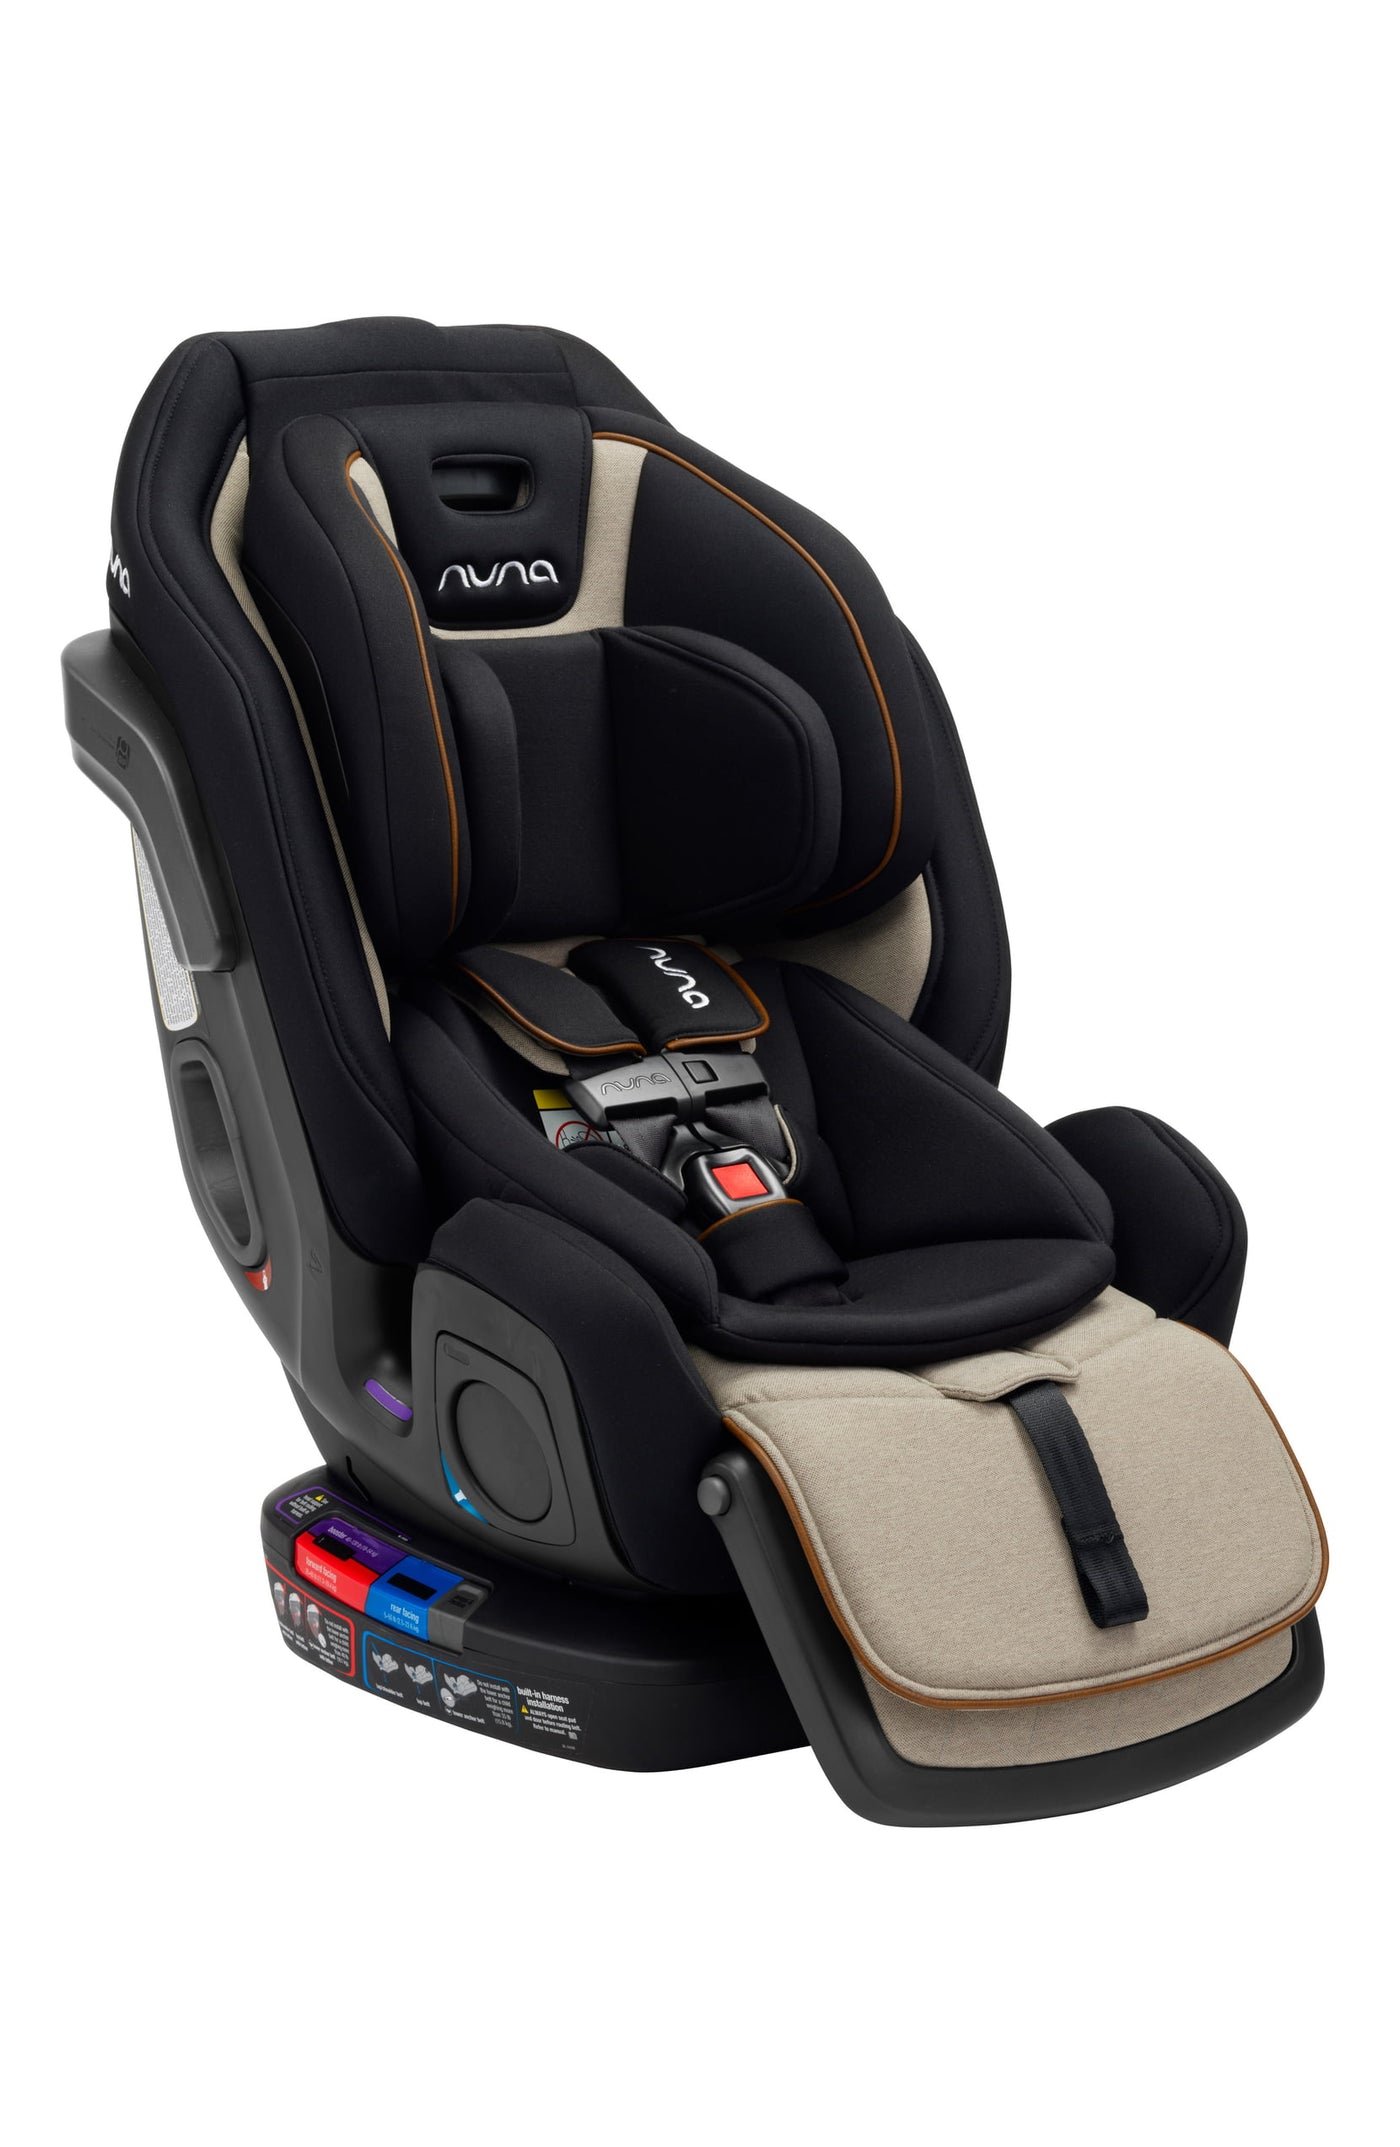 Nuna EXEC All-In-One Car Seat